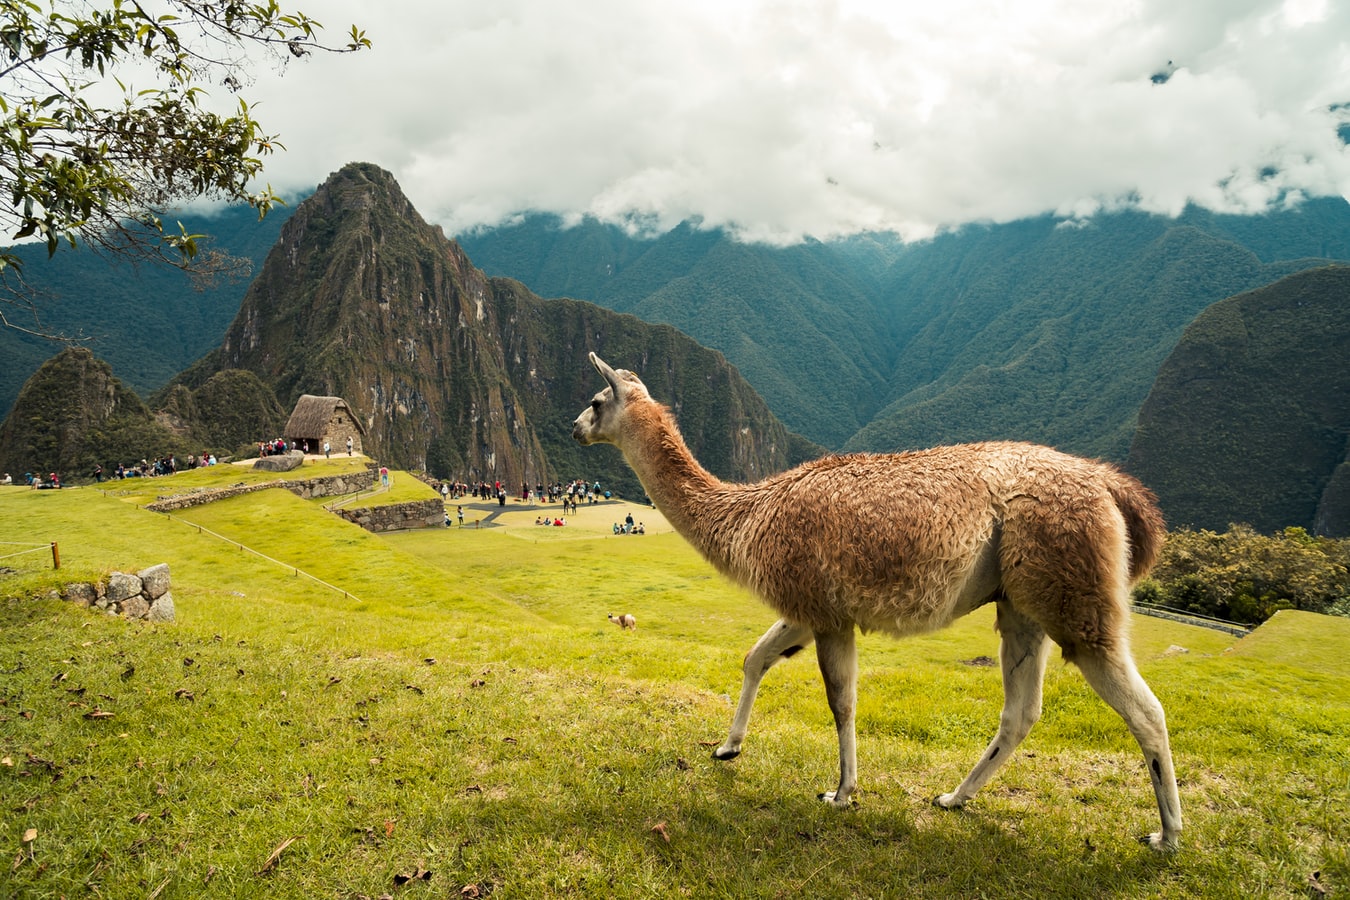 Voyage au Pérou 